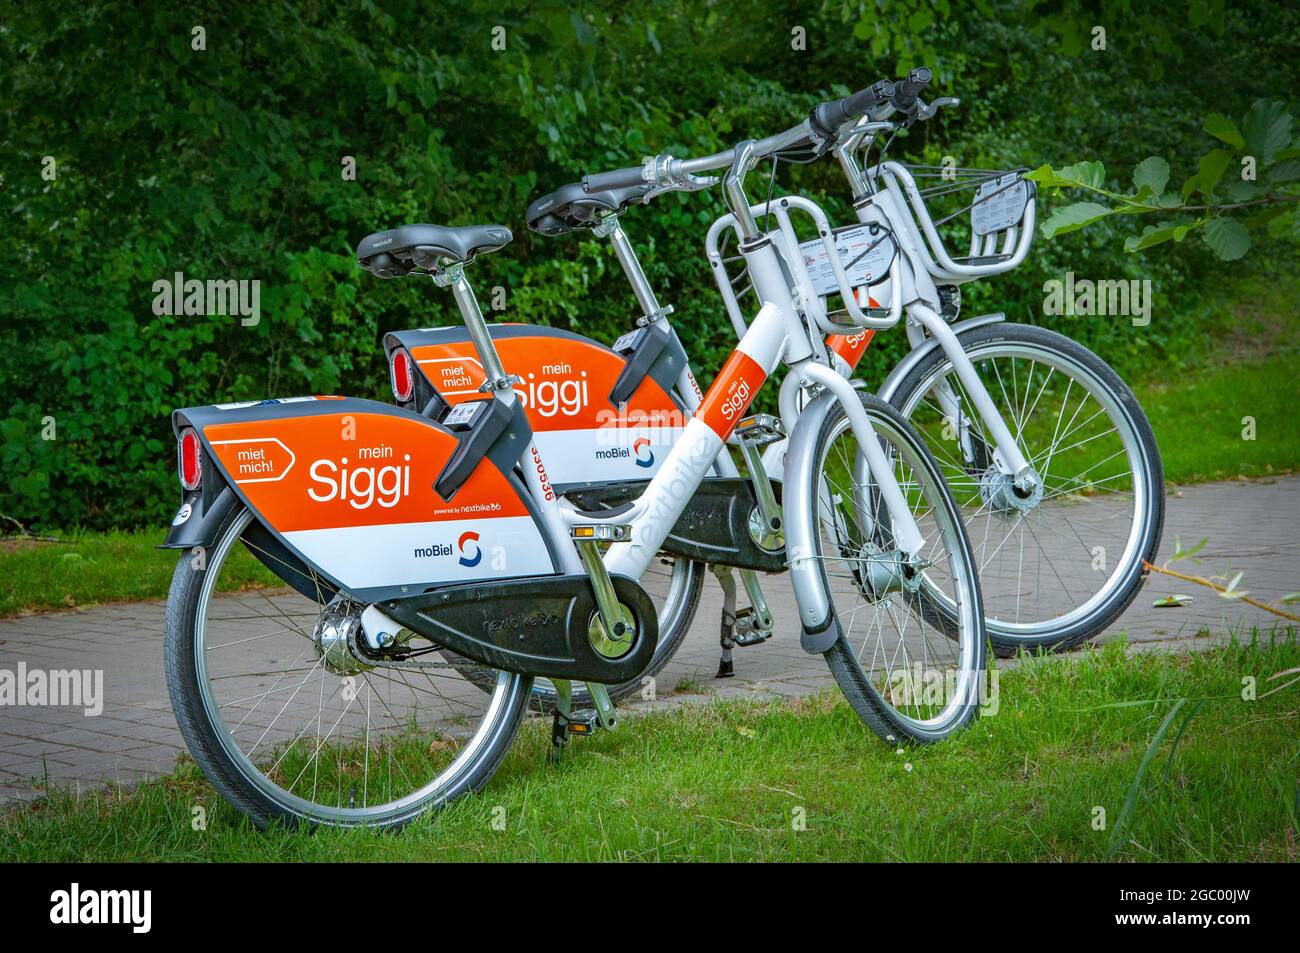 BIELEFELD, GERMANY. JUNE 20, 2021 Loheide park. Nextbike mein Siggi bicycles Stock Photo